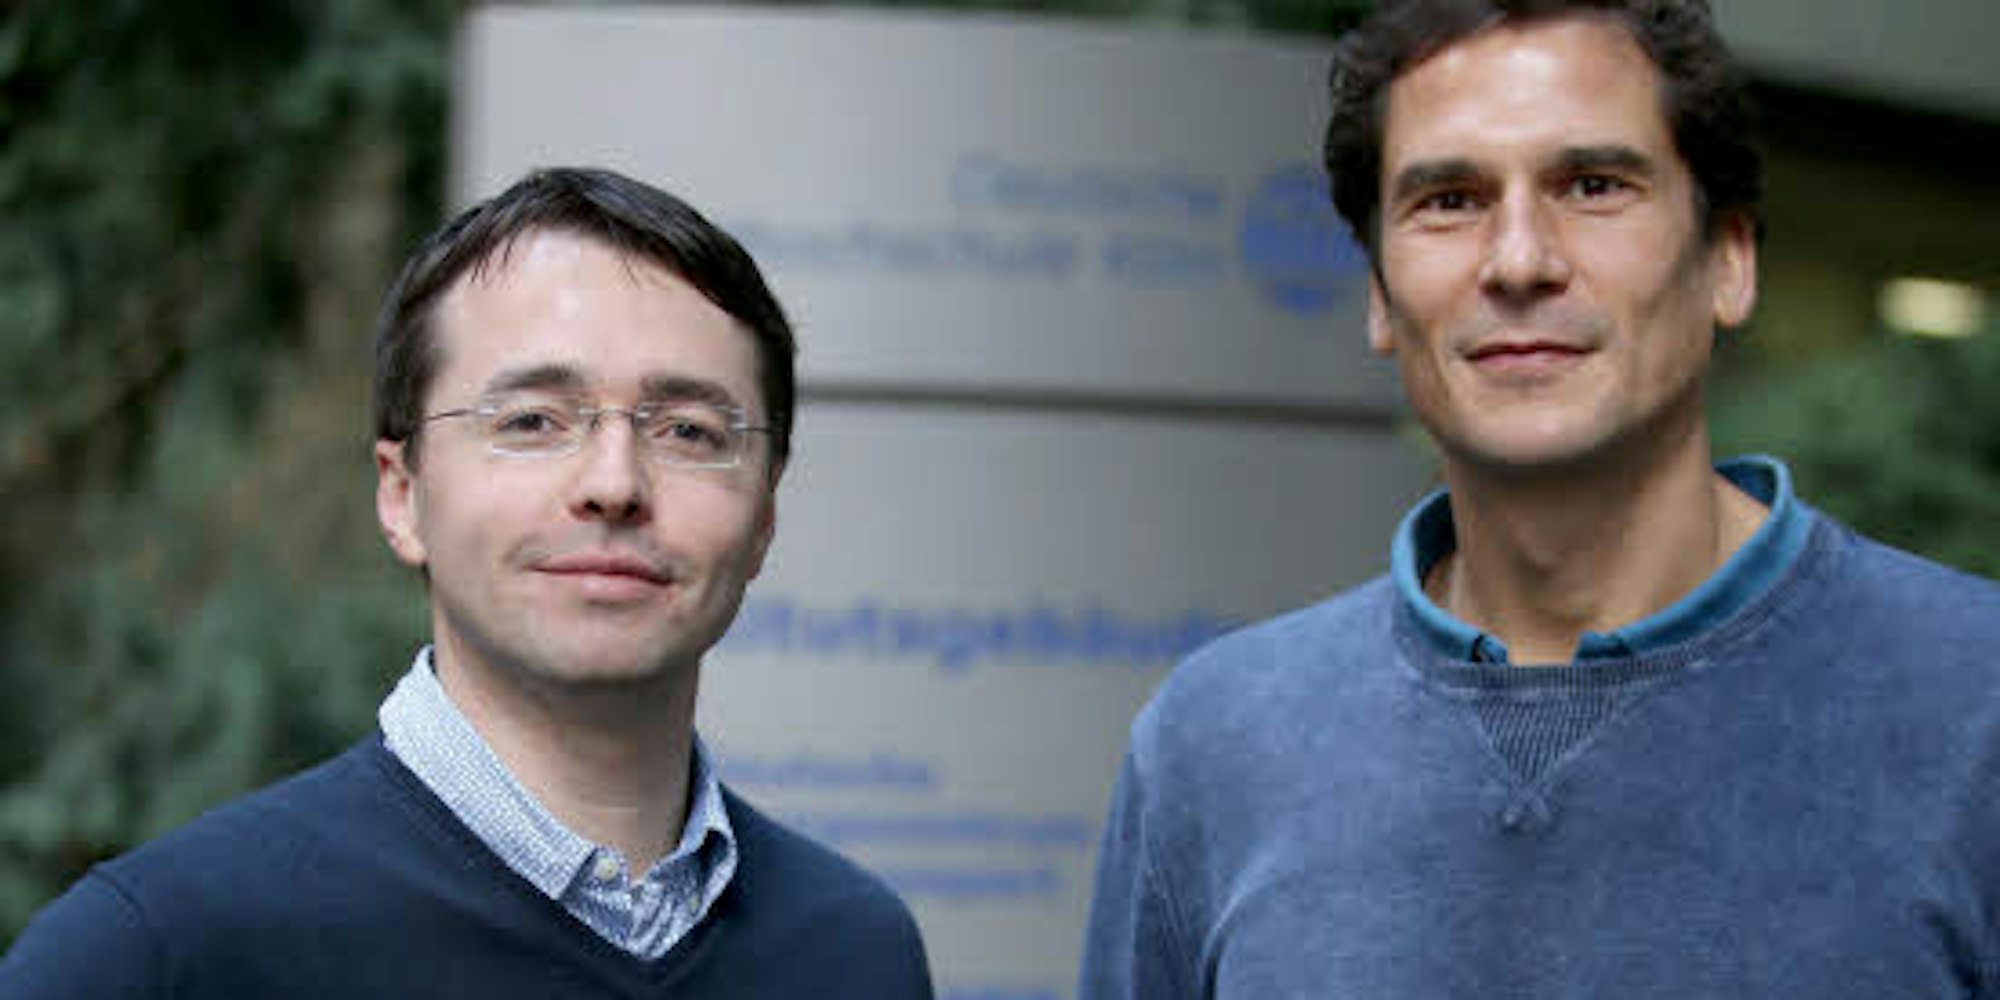 Es geht nichts über gesunde Rivalität: Spoho-Doktorand Johannes Berendt (l.) mit Professor Sebastian Uhrich.